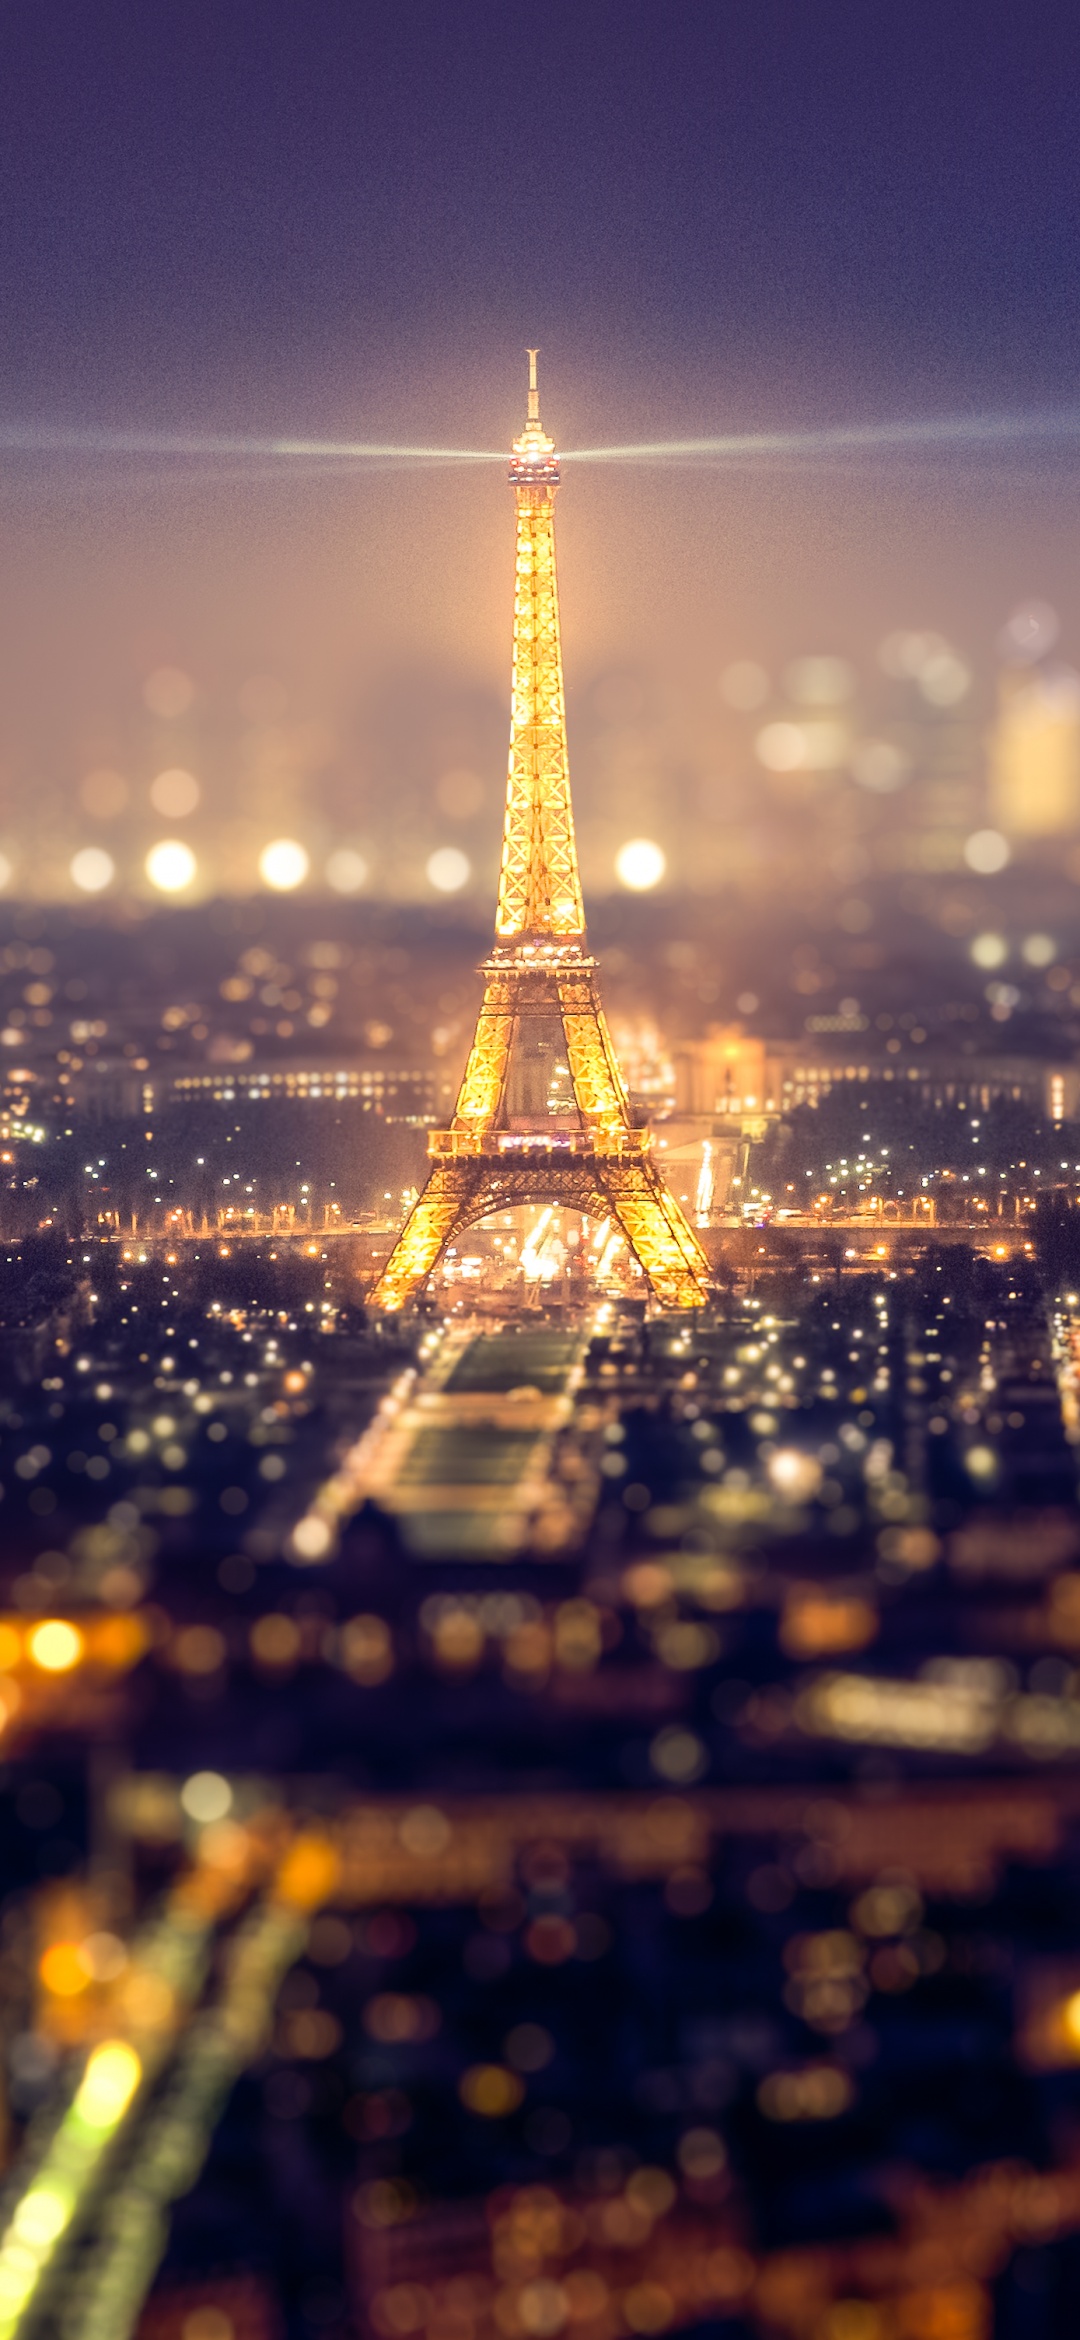 Eiffel Tower Wallpaper 4K, Paris, Night time, City lights, Cityscape